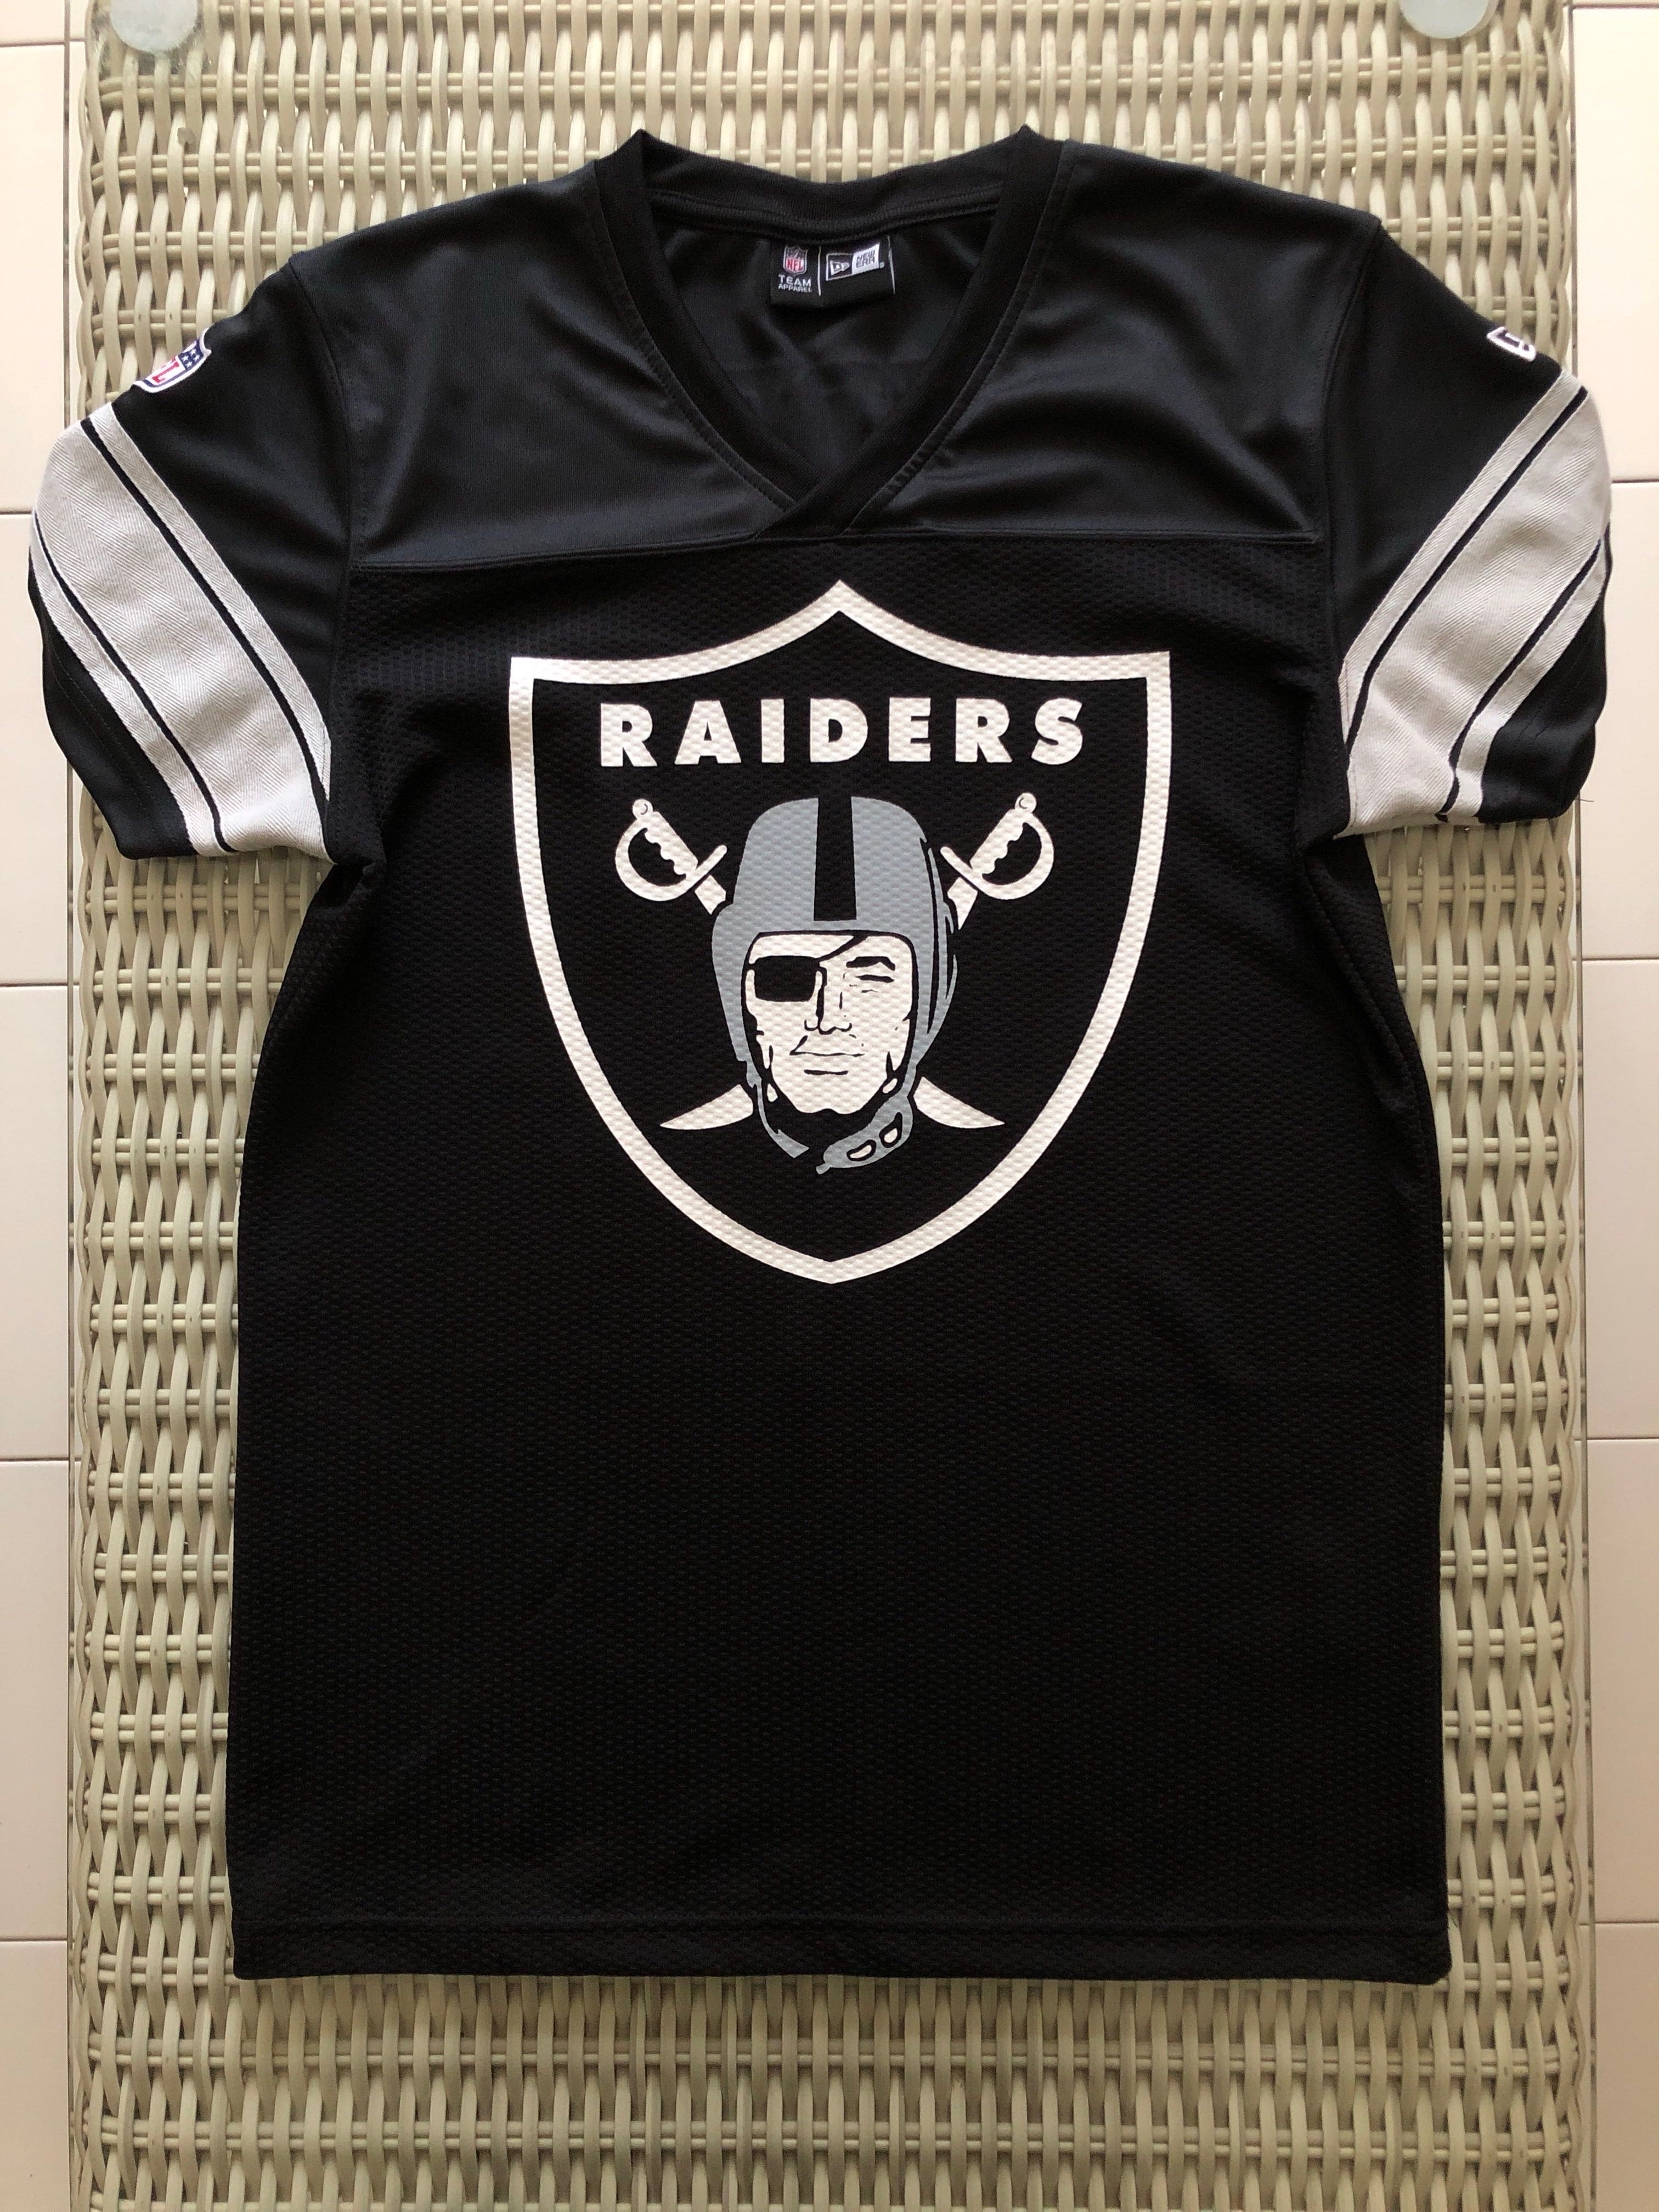 new raiders jersey